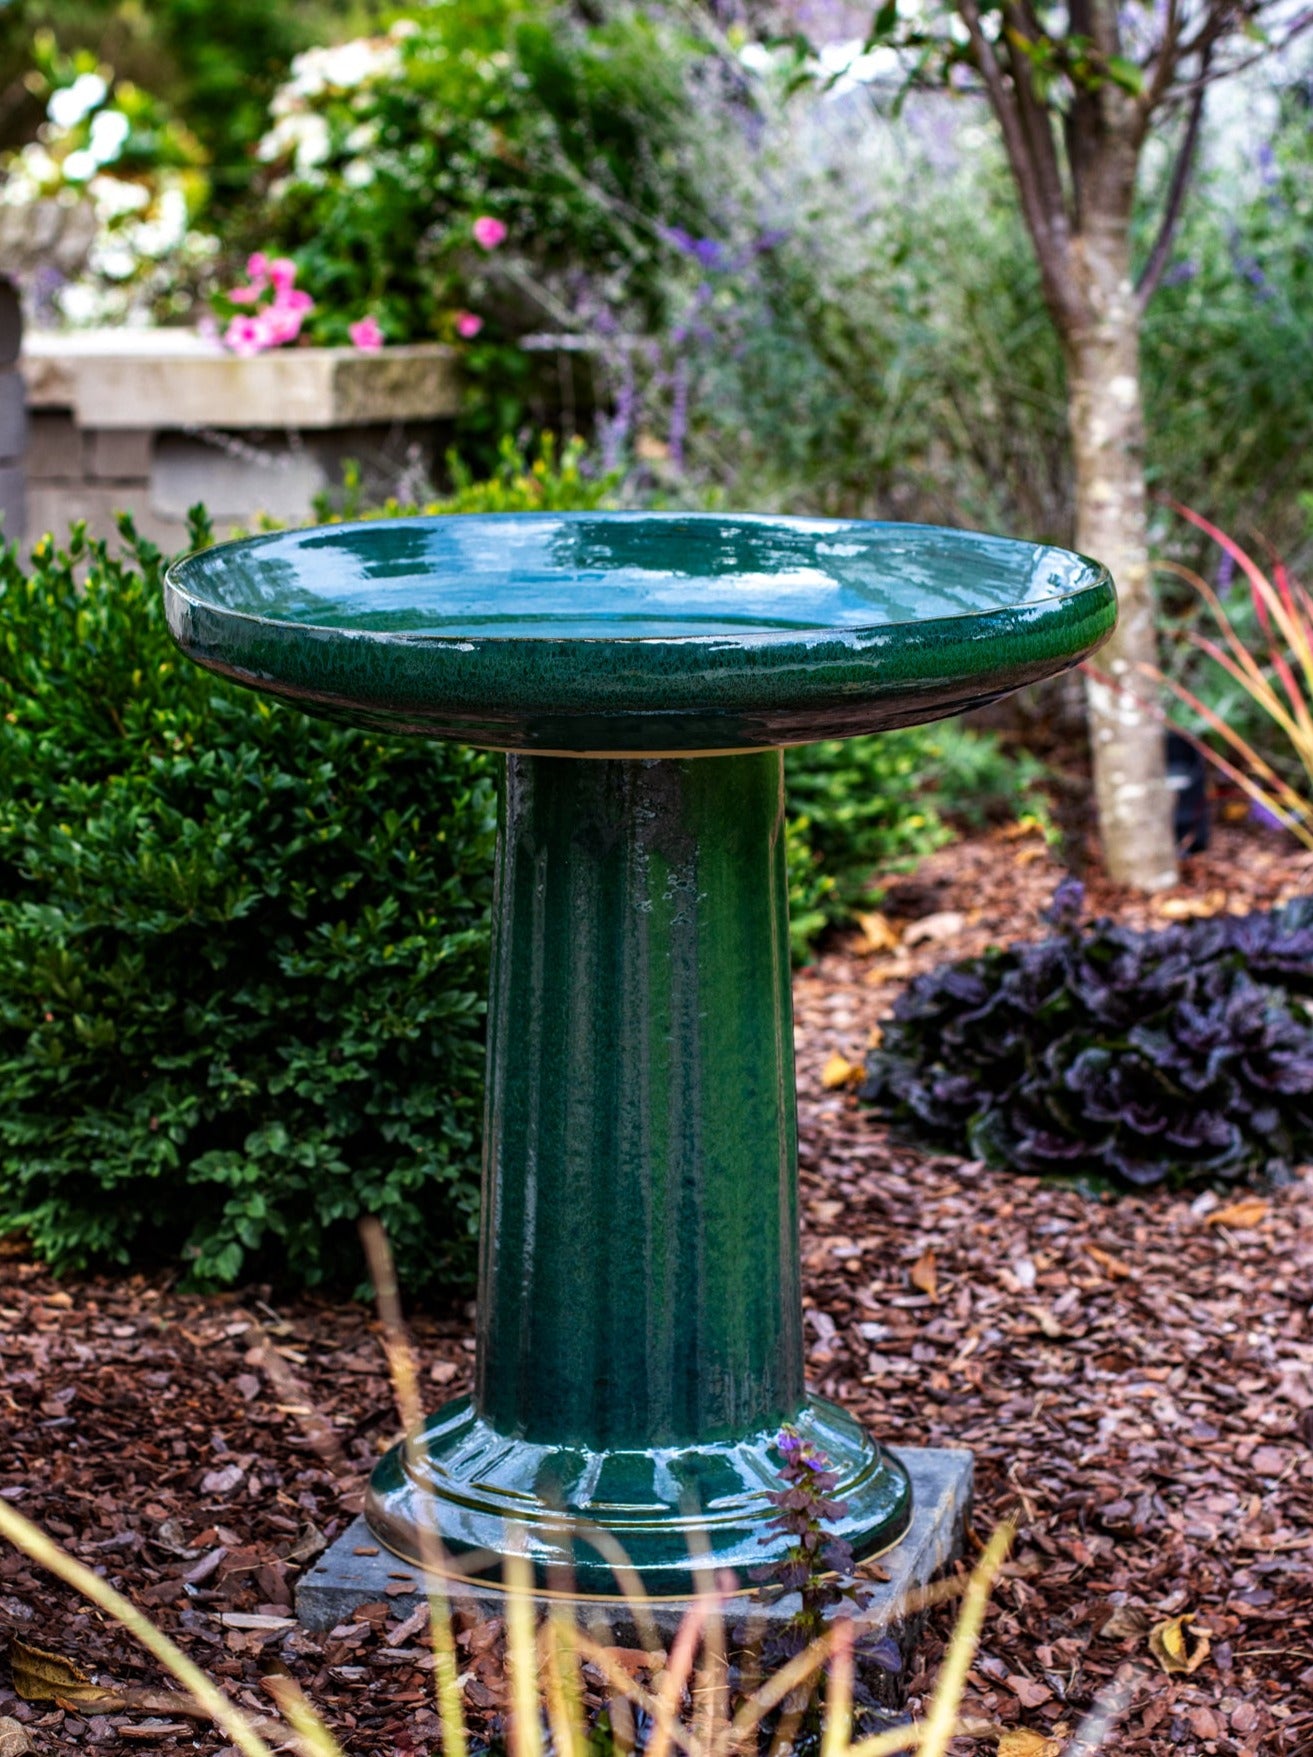 ceramic green birdbath with column design in a landscaped garden setting